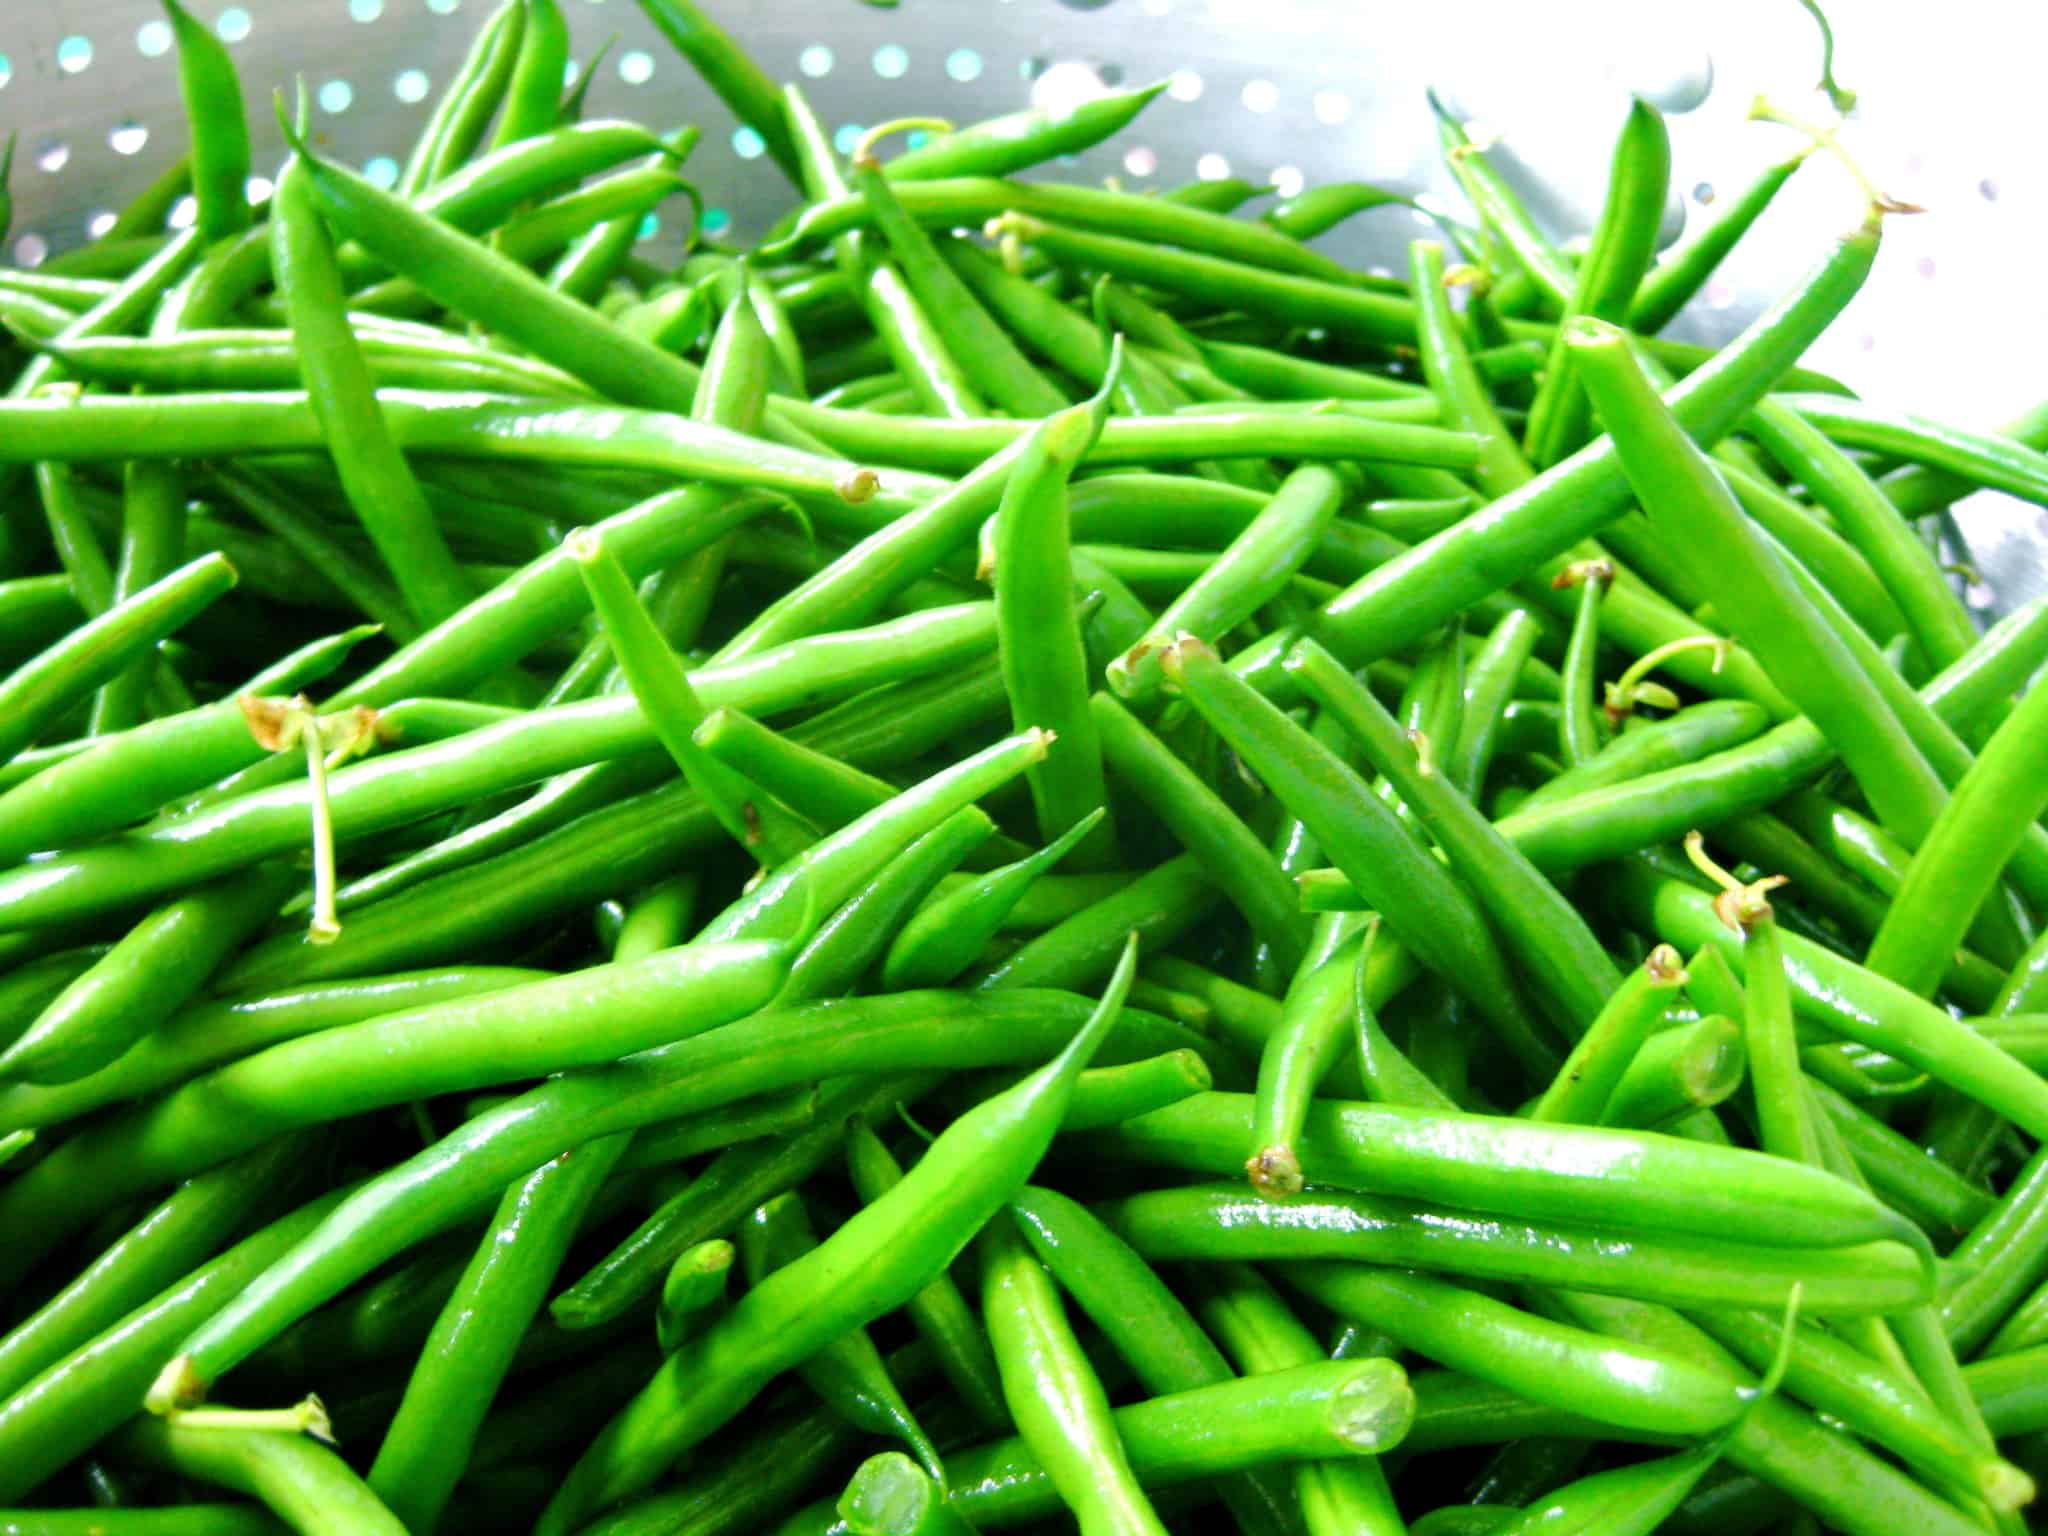 Some beans. Beans Vegetables. Зелень Бобы морковь. Группа Green Beans. Бобы ки стр дю.